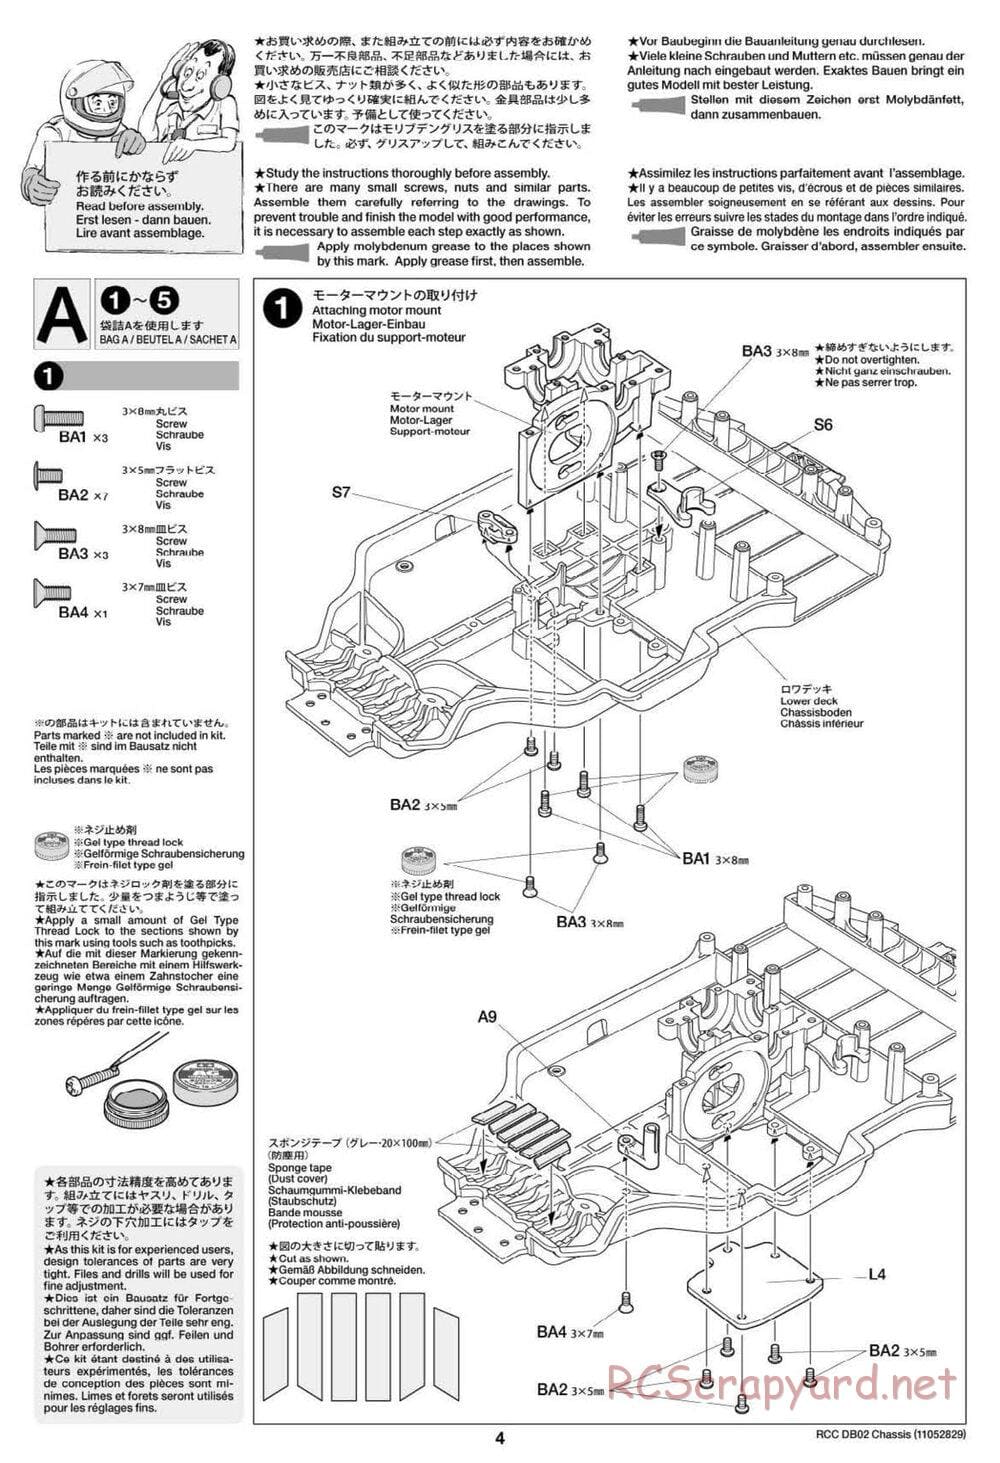 Tamiya - Leonis - DB-02 Chassis - Manual - Page 4